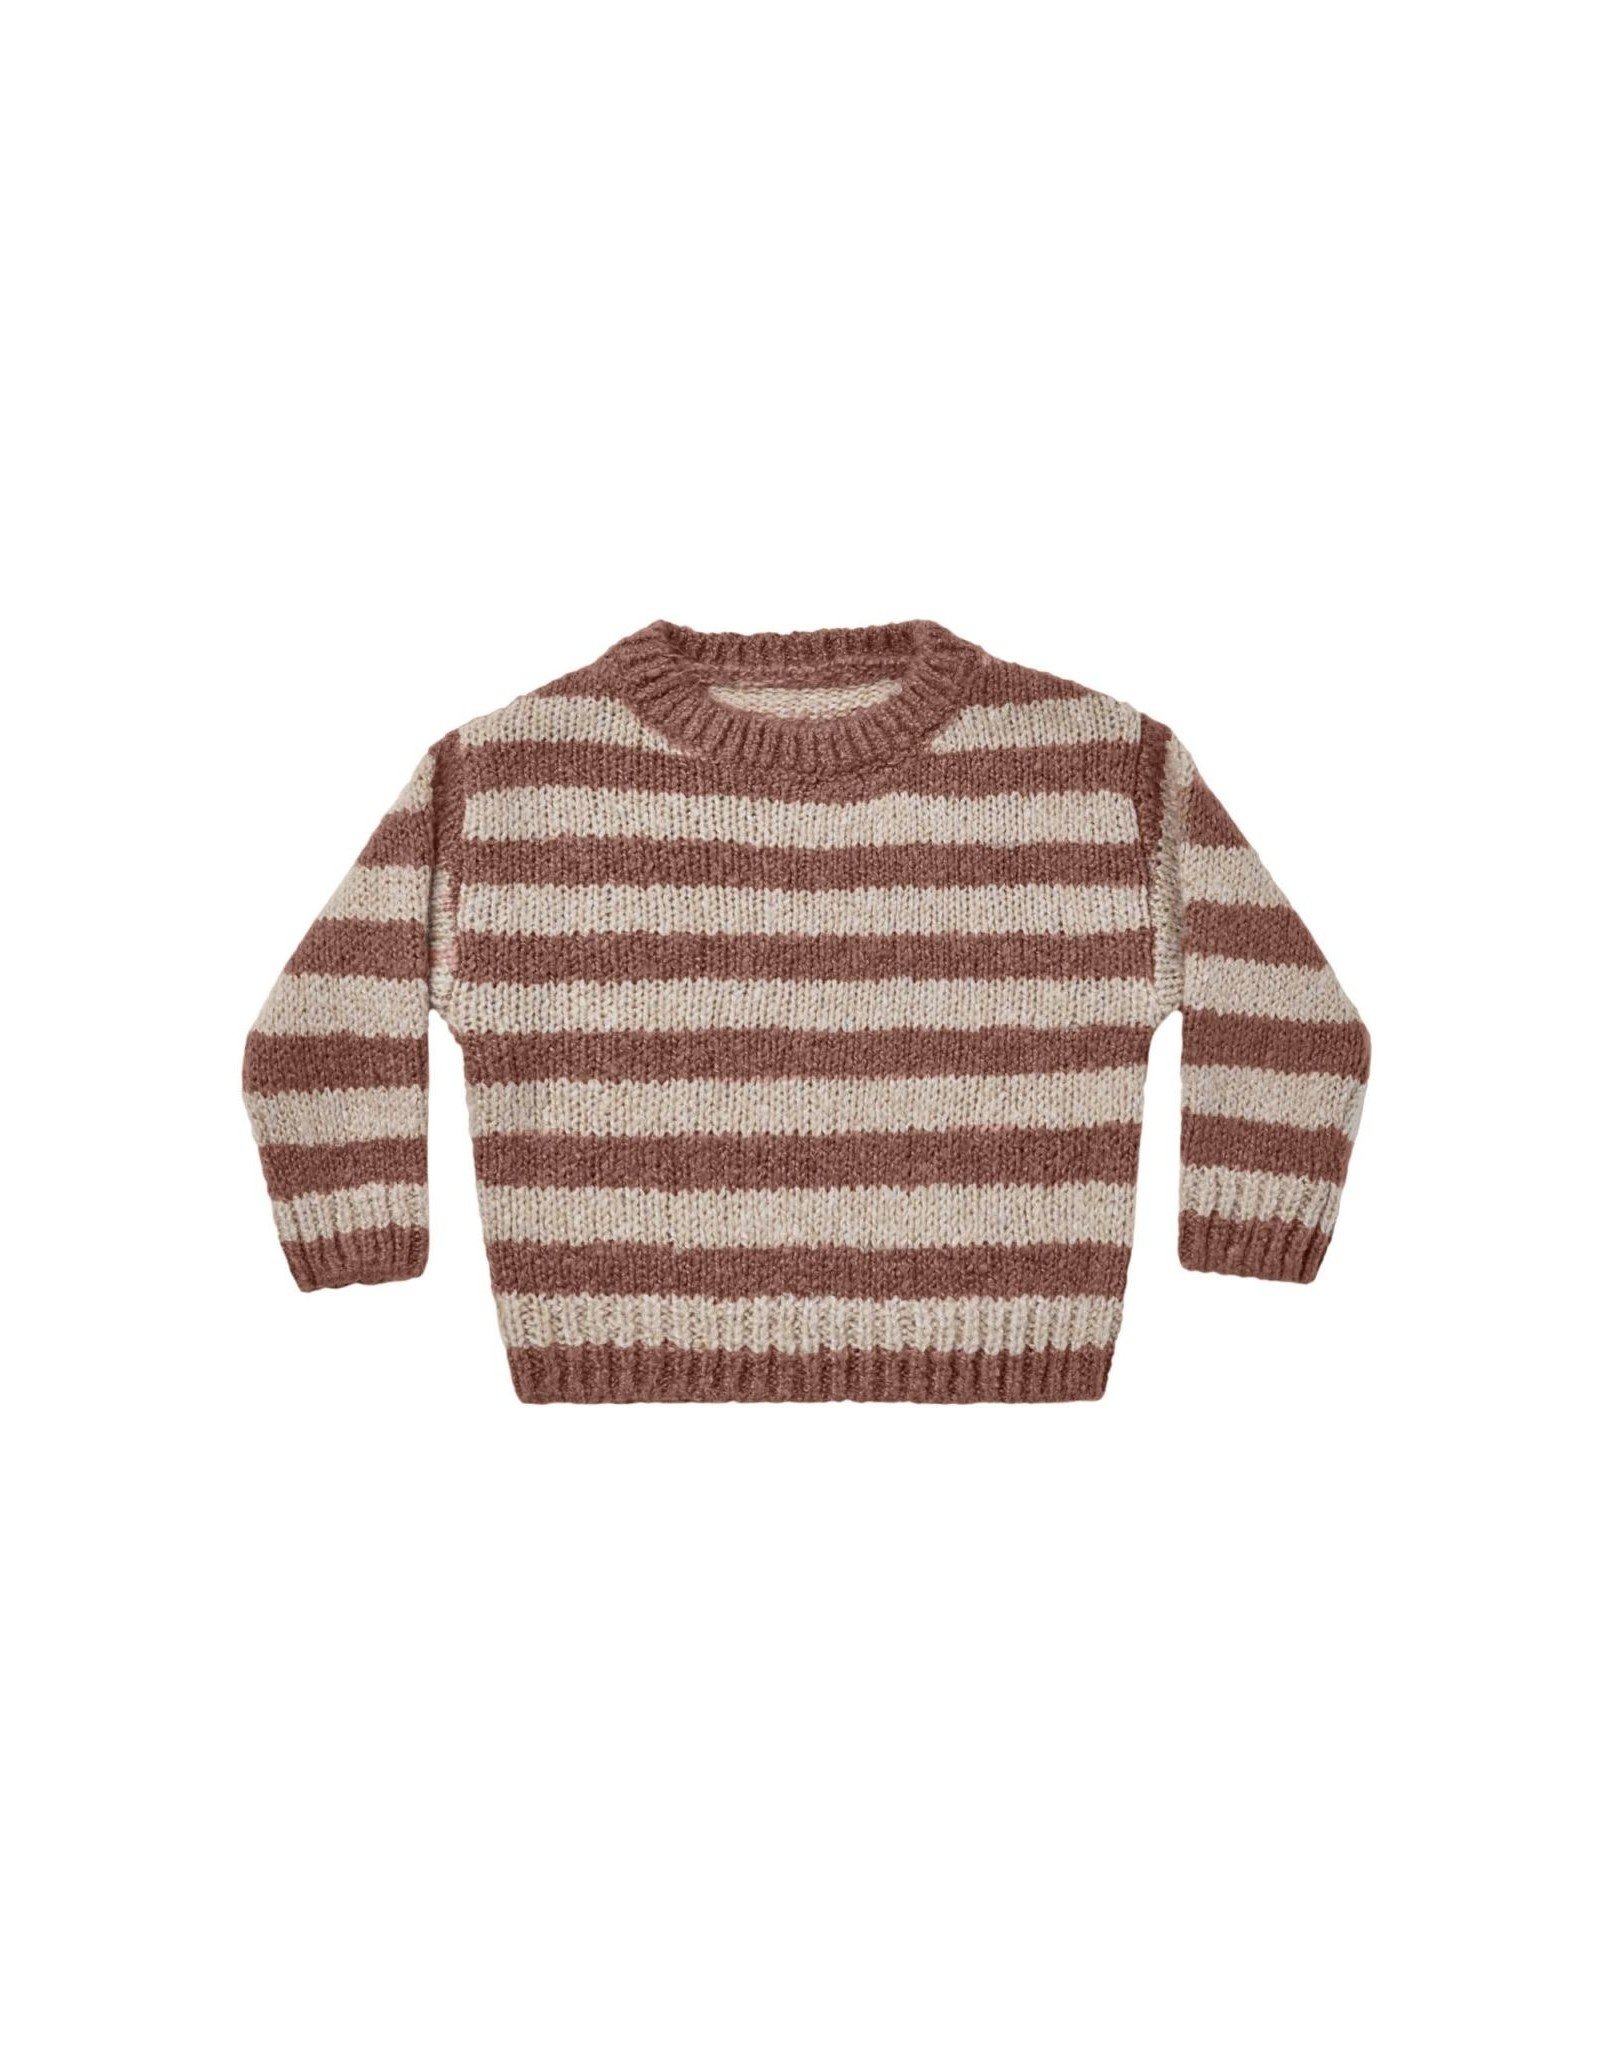 Rylee and Cru aspen sweater- mocha stripe